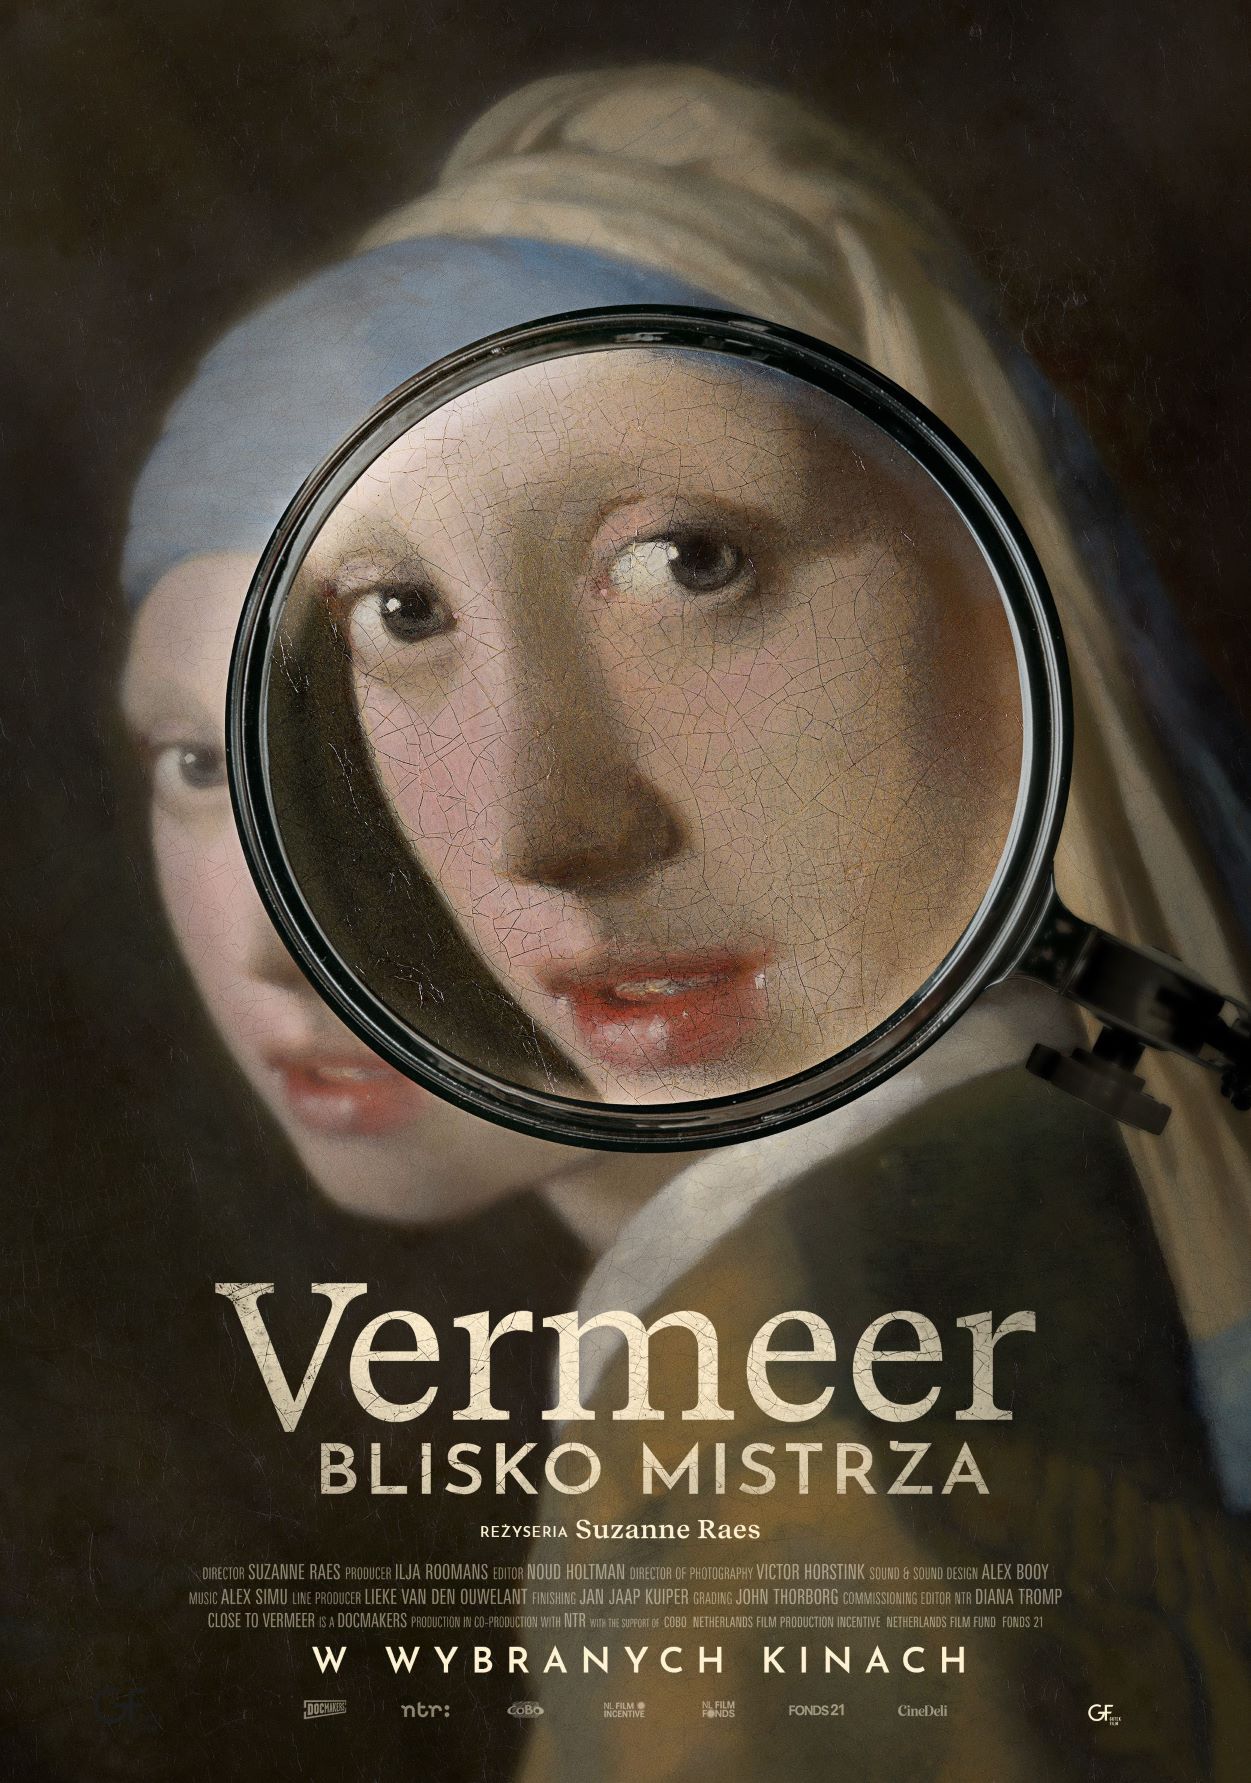 Plakat Vermeer. Blisko mistrza 176525